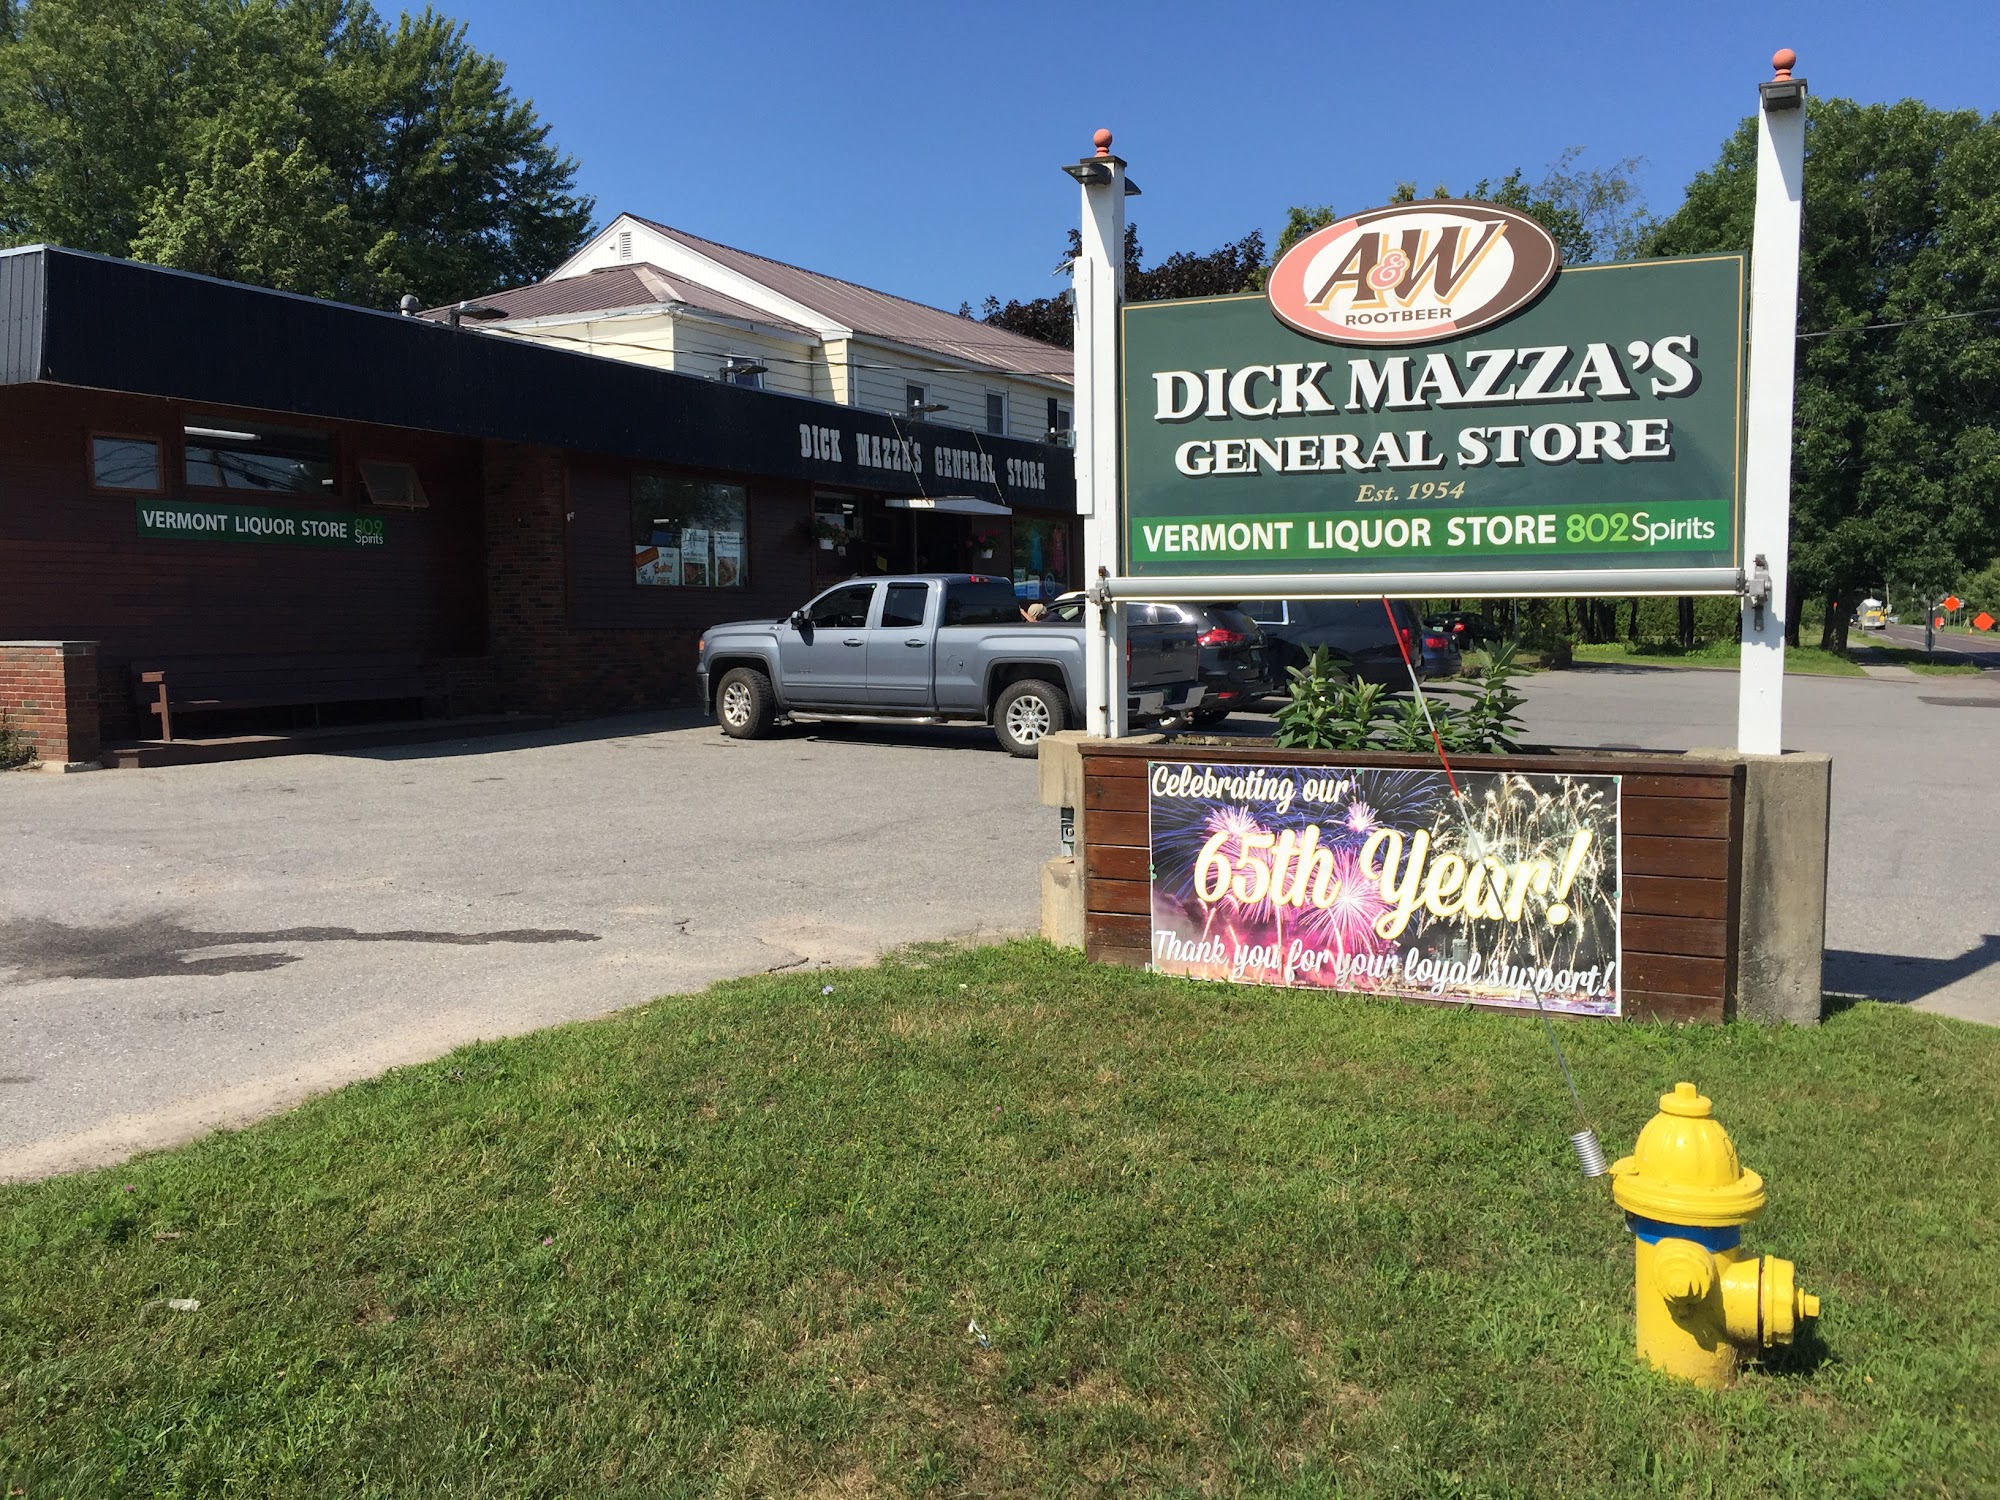 Dick Mazza's General Store